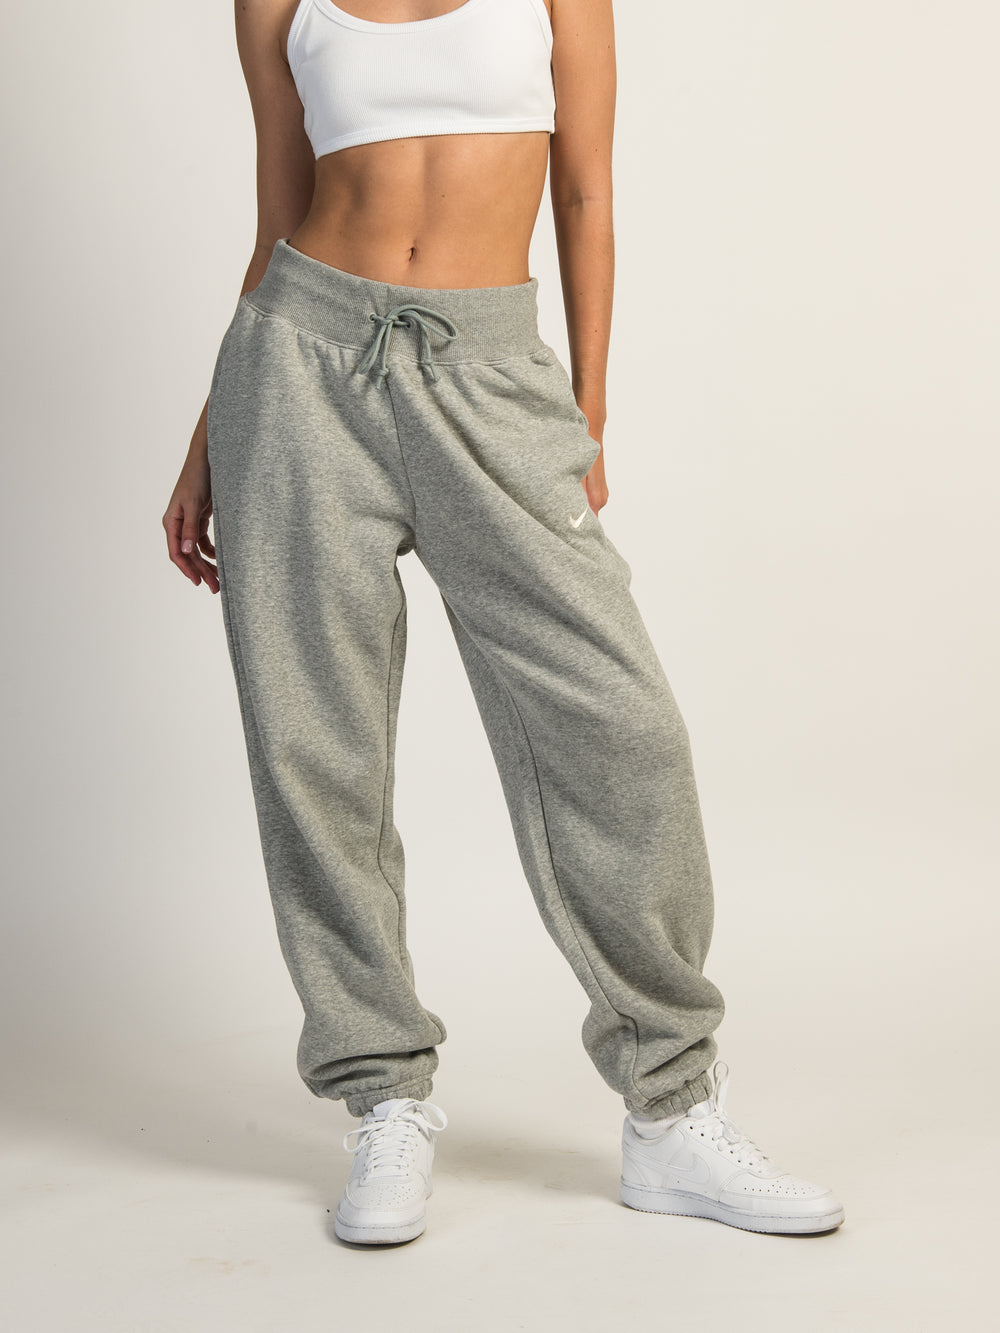 NIKE PHOENIX FLEECE PANTS for women, grey! Buy online - HERE